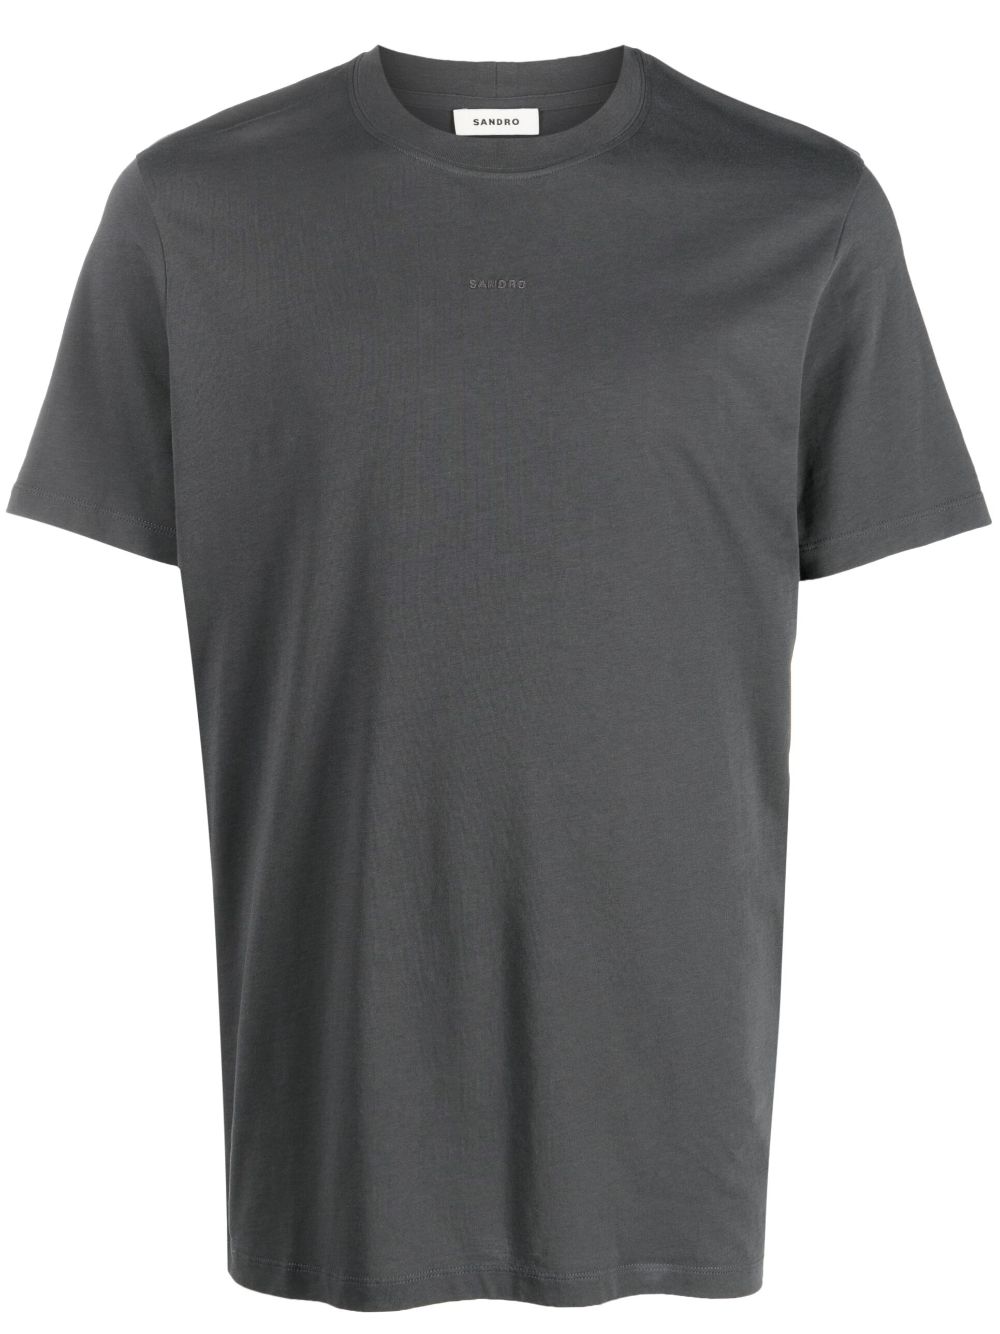 SANDRO embroidered-logo cotton T-shirt - Grey